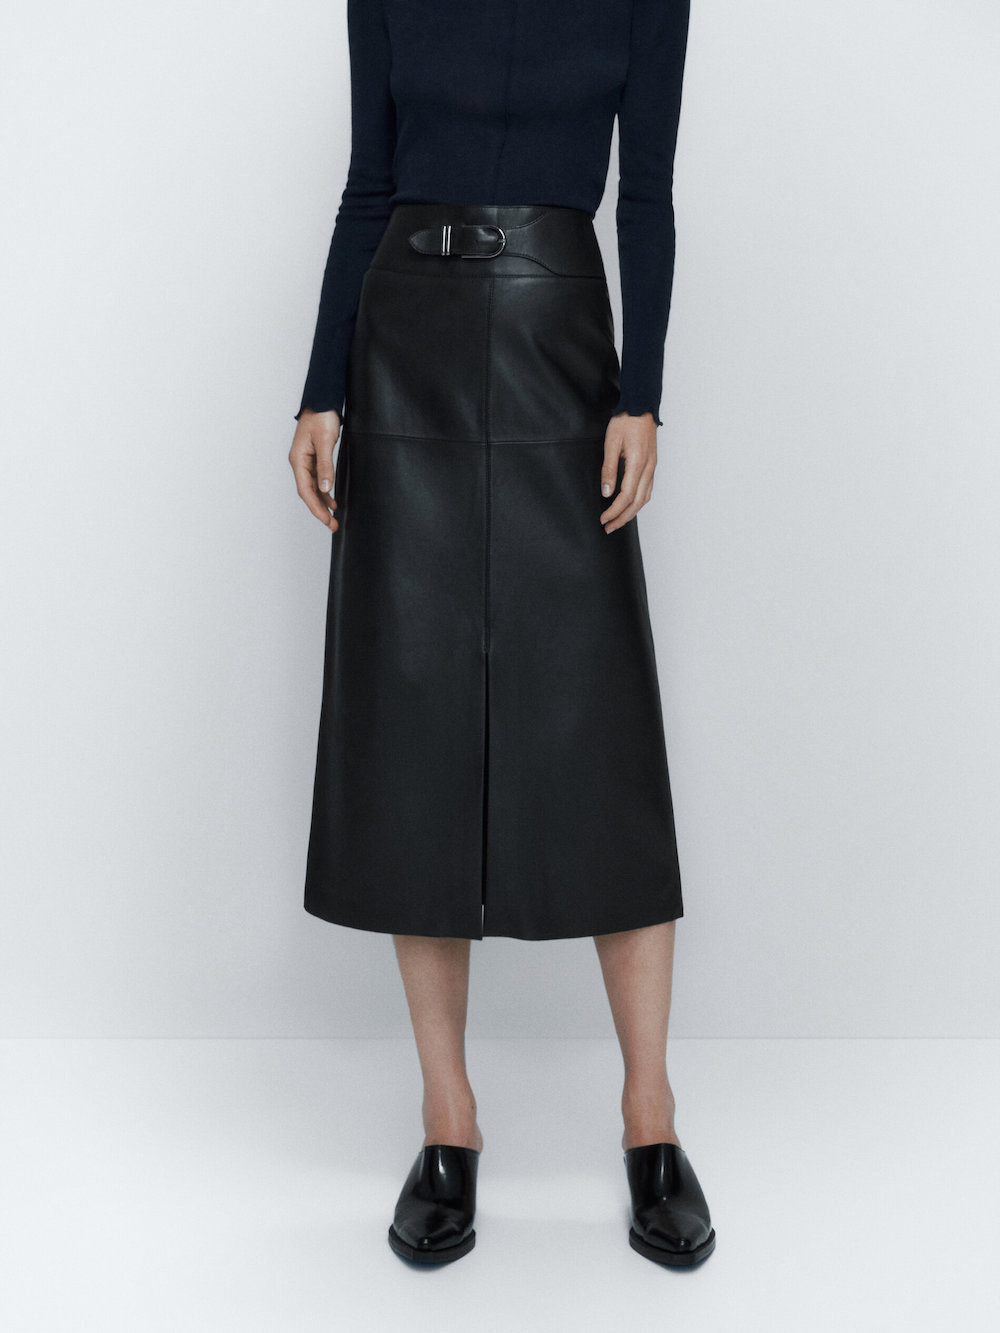 Massimo Dutti black leather midi skirt